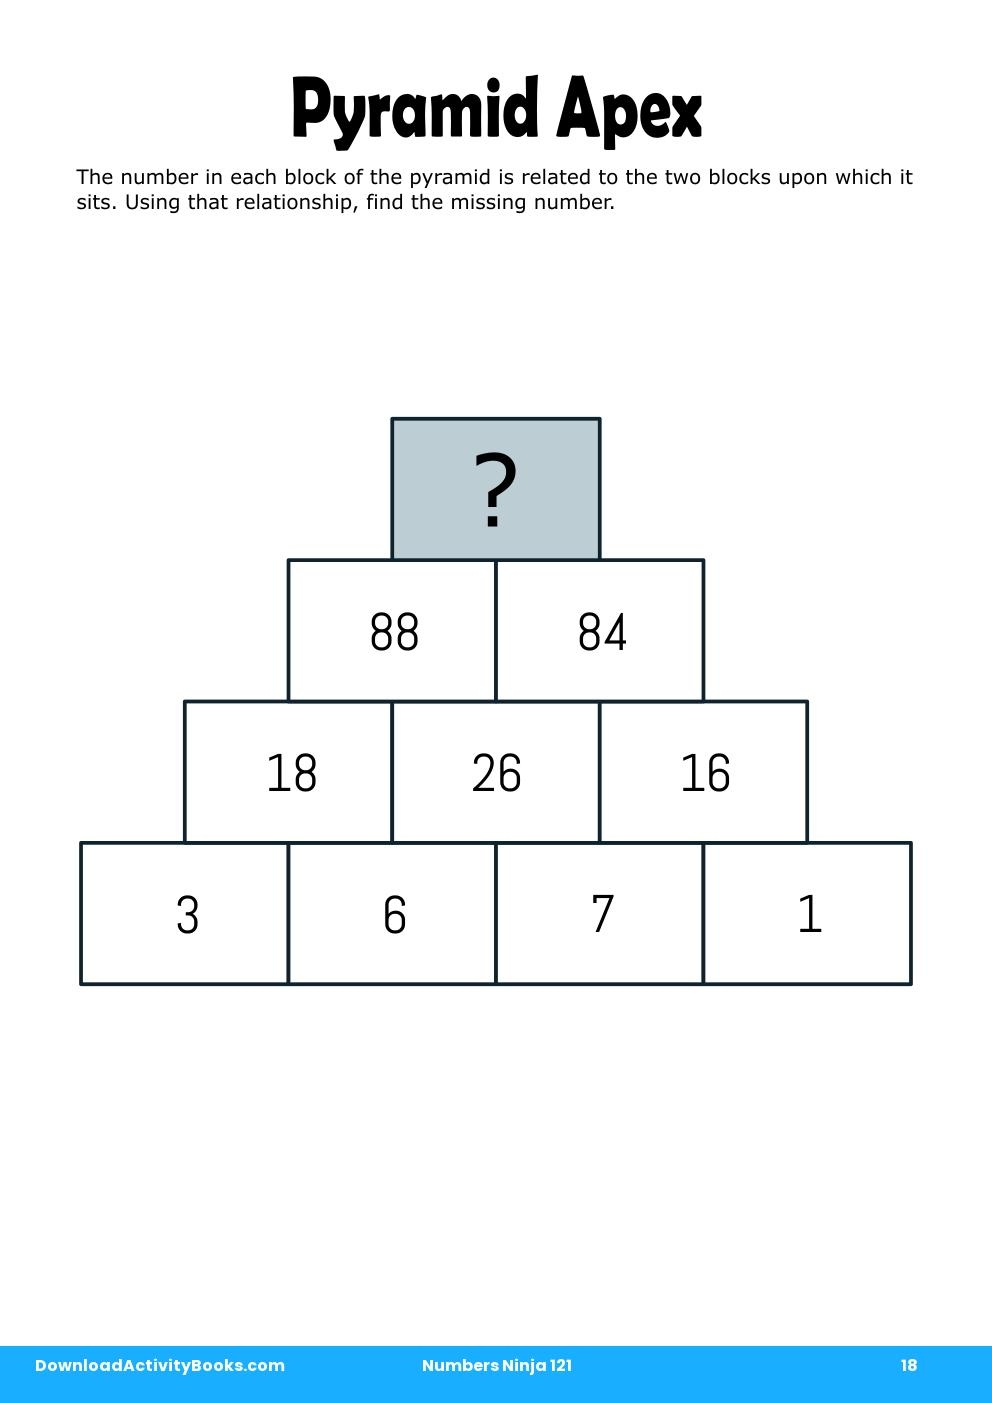 Pyramid Apex in Numbers Ninja 121